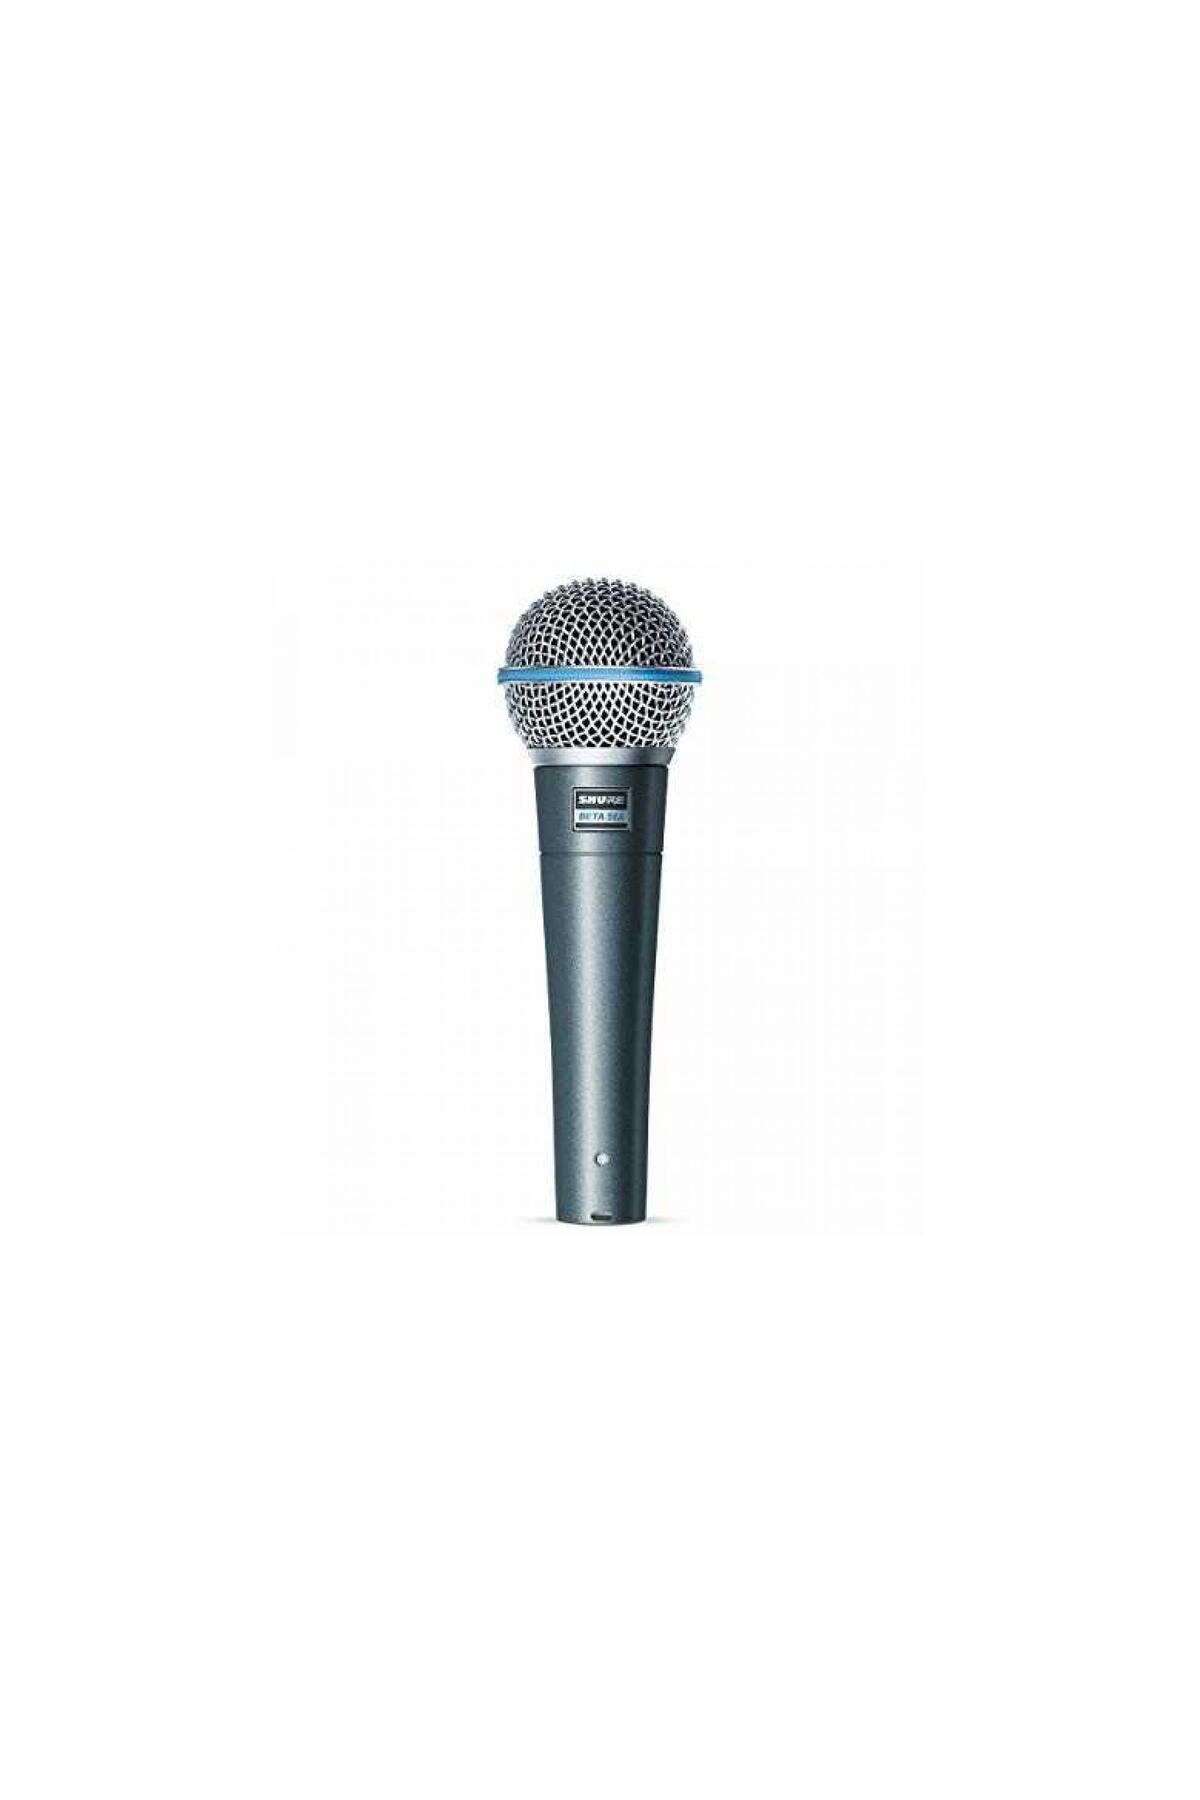 Shure Beta 58a Dinamik Mikrofon